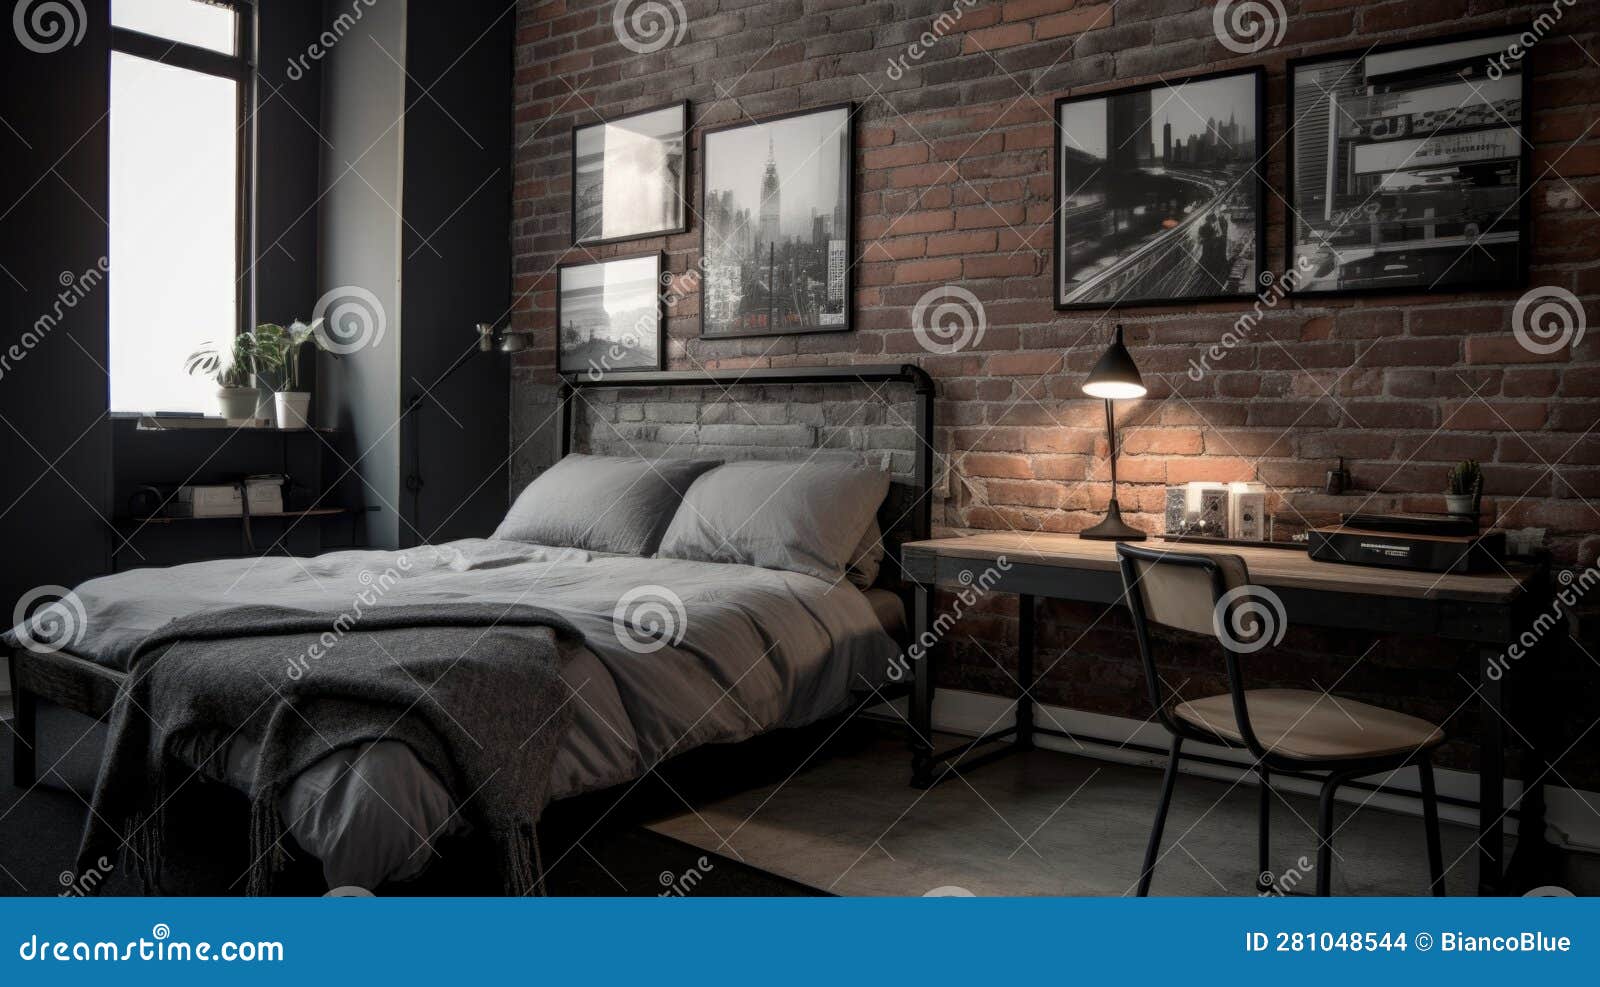 Bedroom Decor, Home Interior Design . Industrial Urban Style Stock ...